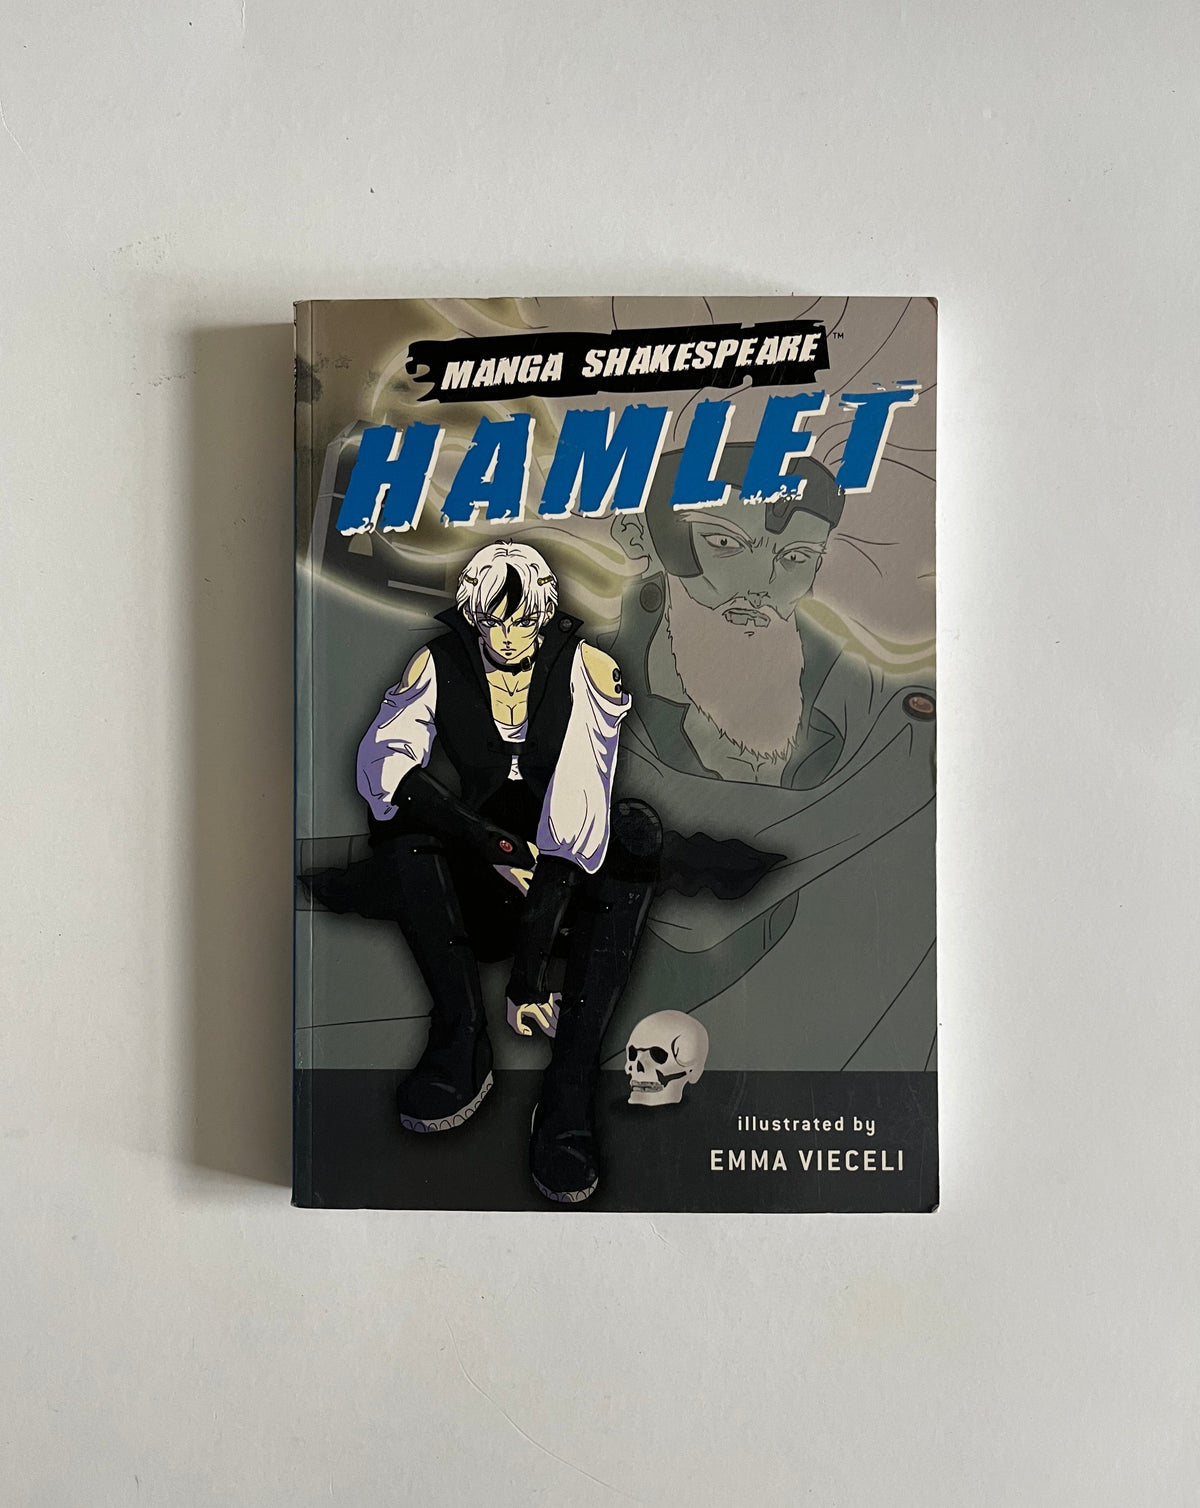 Manga Shakespeare: Hamlet illustrated by Emma Vieceli